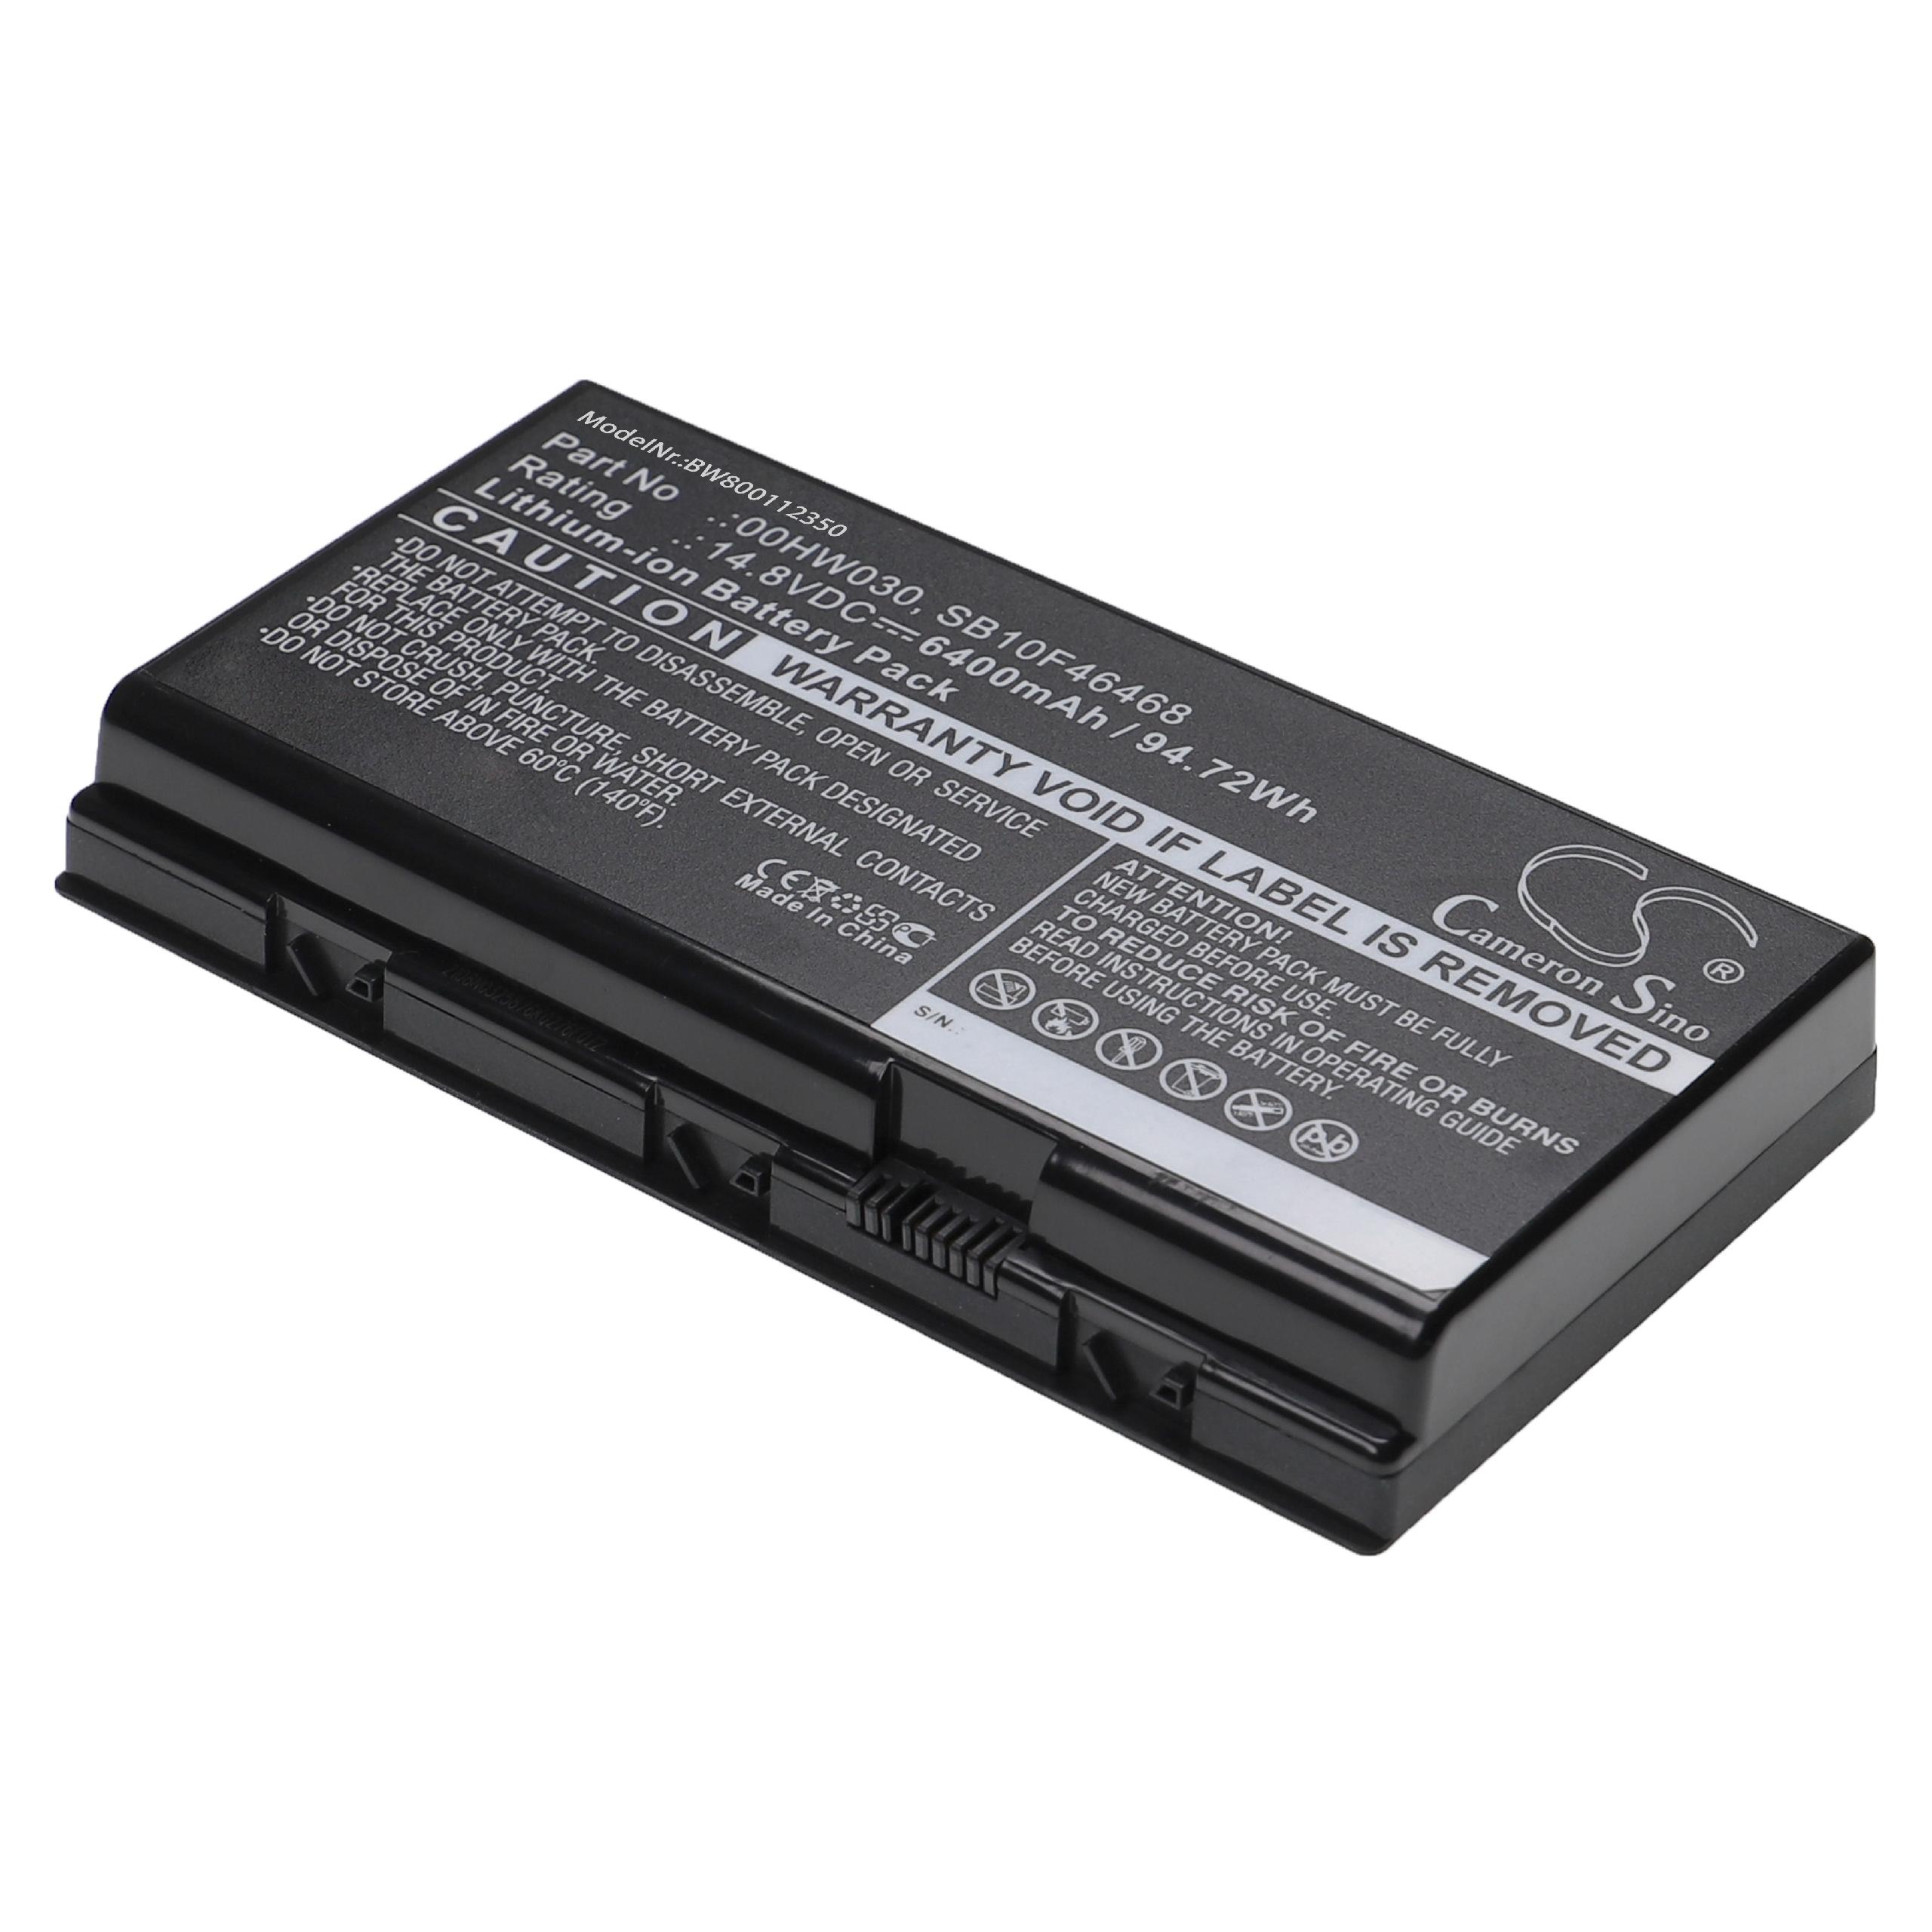 Batterie remplace Lenovo 00HW030, 01AV451, 4ICR18/65-2 pour ordinateur portable - 6400mAh 14,8V Li-ion, noir